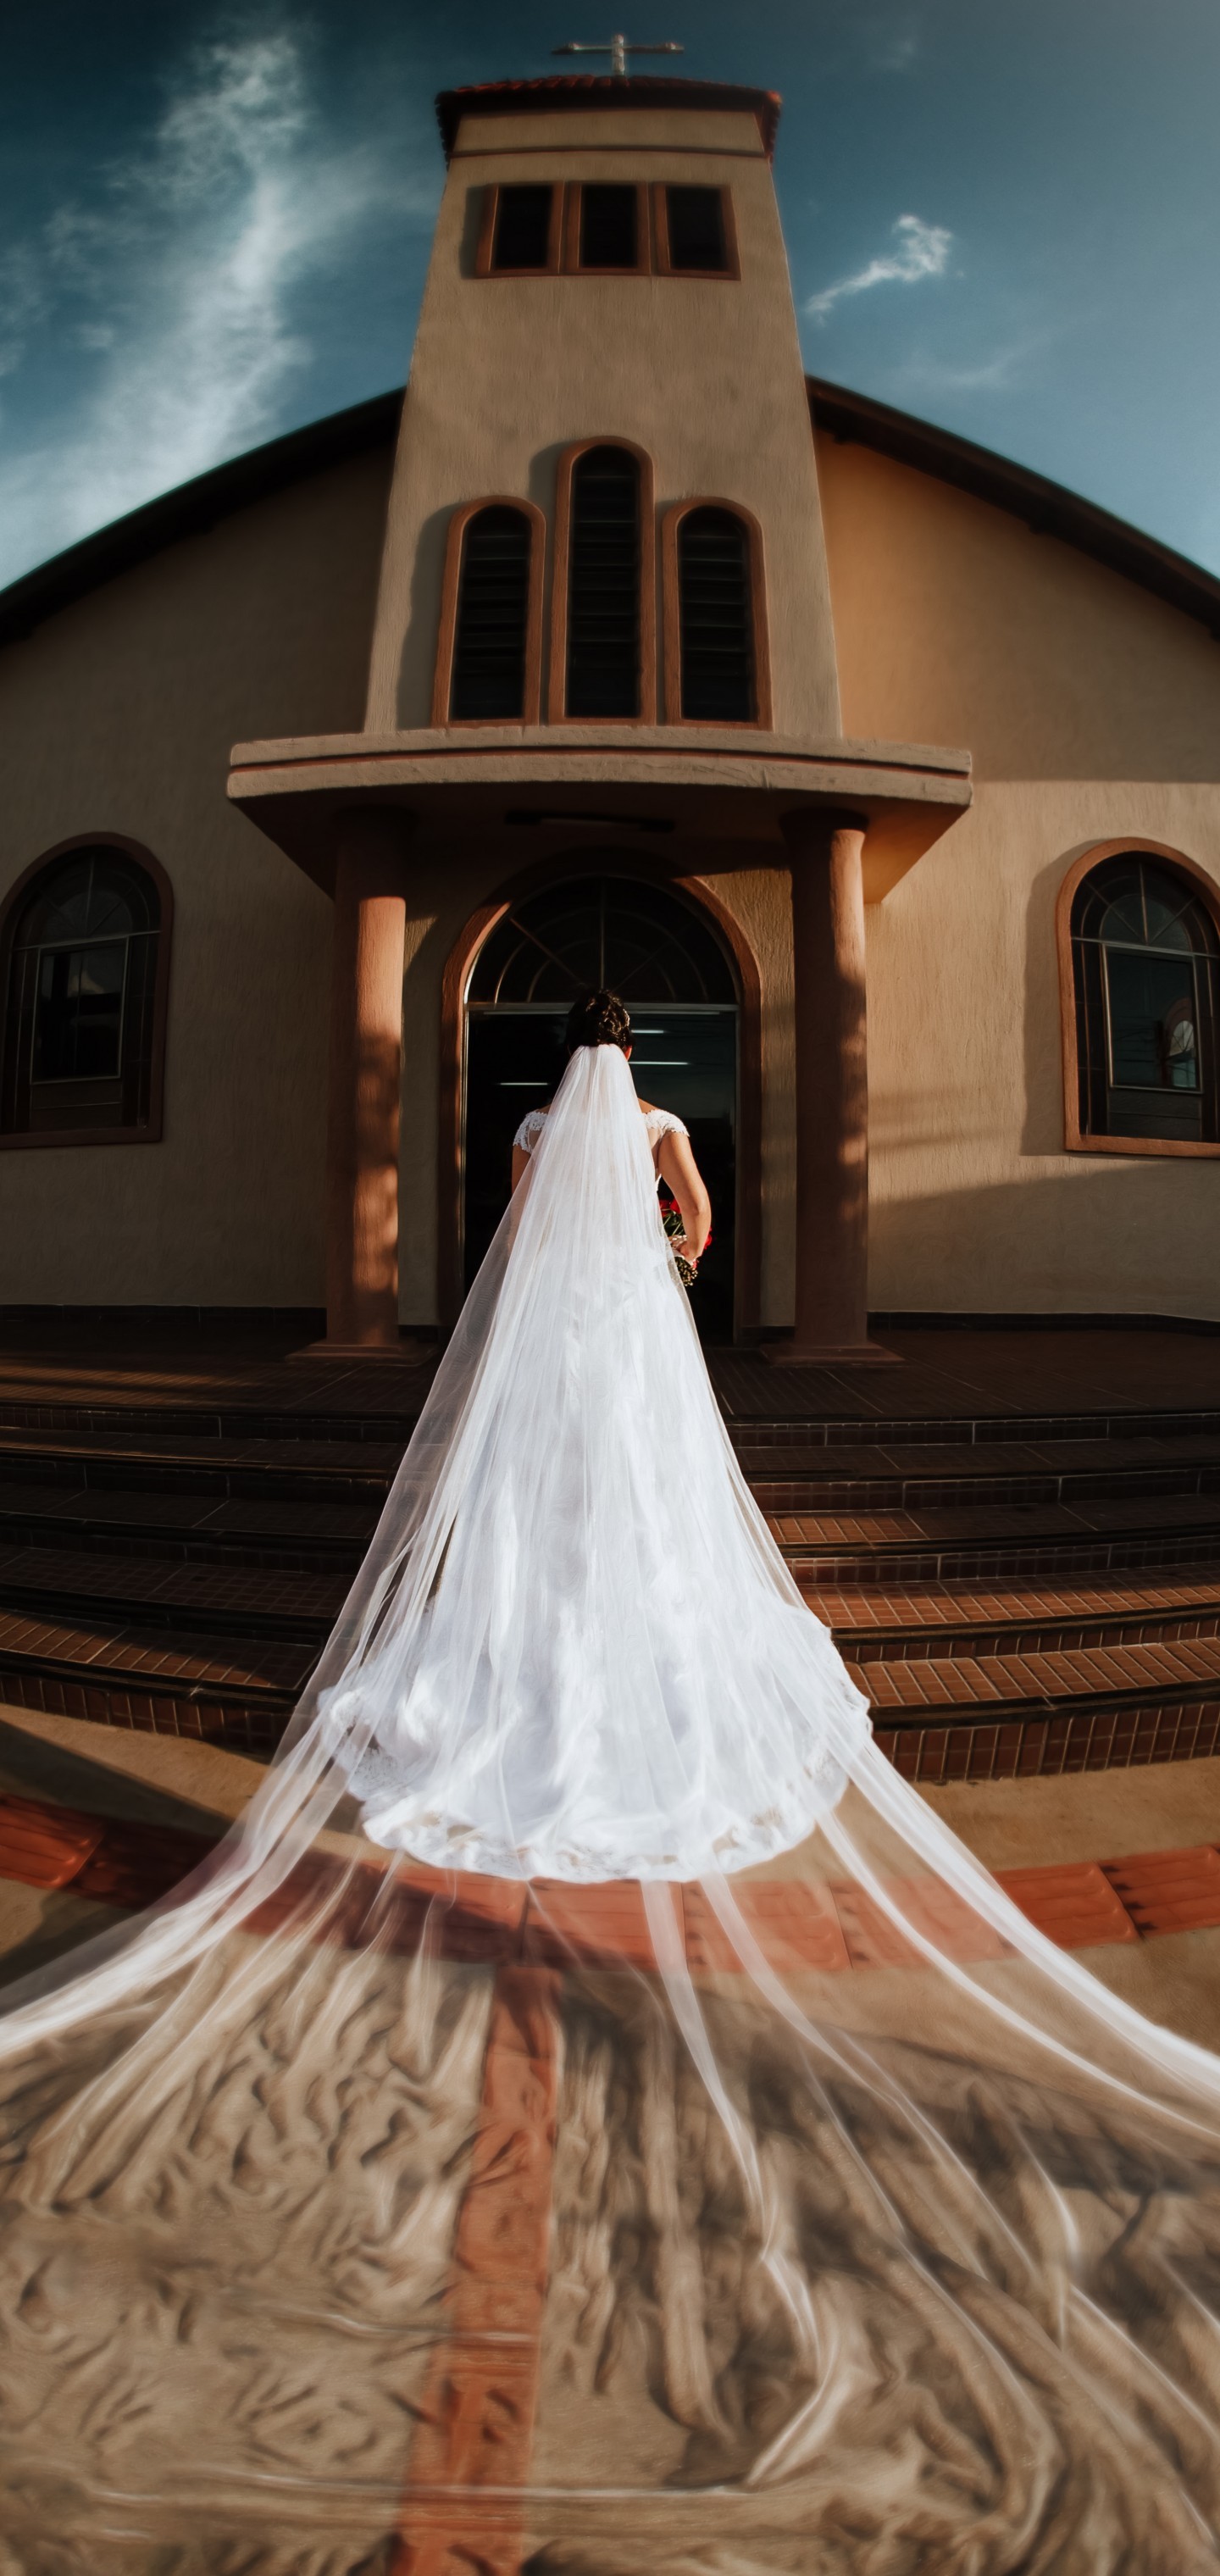 Bridge, Wedding Dress, Photography, Church, Clouds, - Bridal Veil - HD Wallpaper 